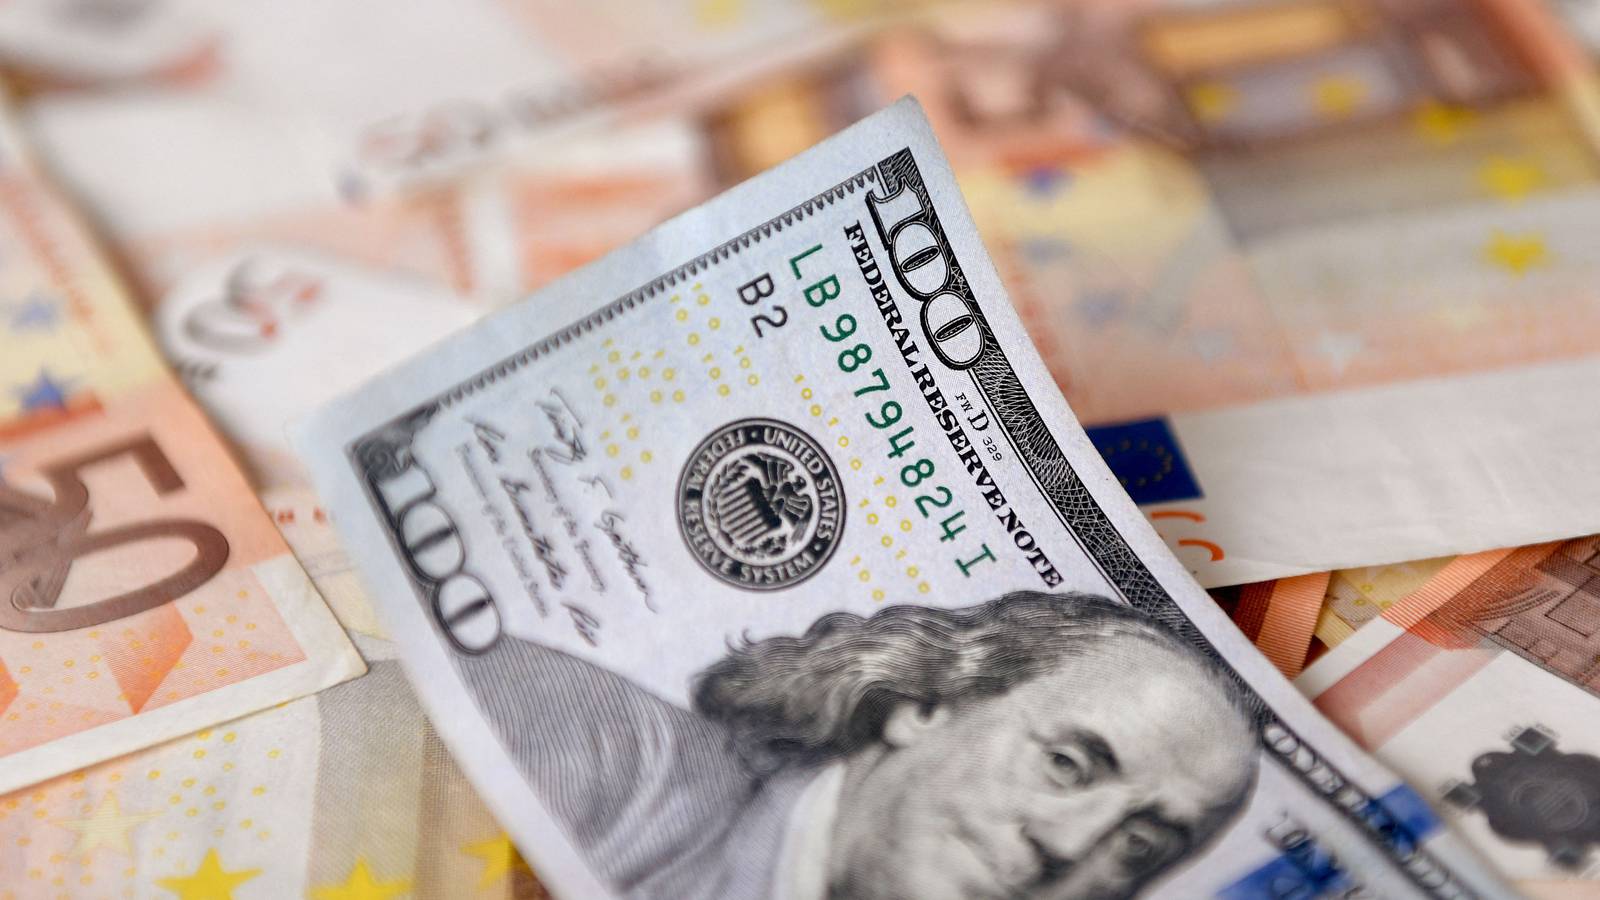 Euro's slide towards dollar parity reflects heavier hit from Ukraine war